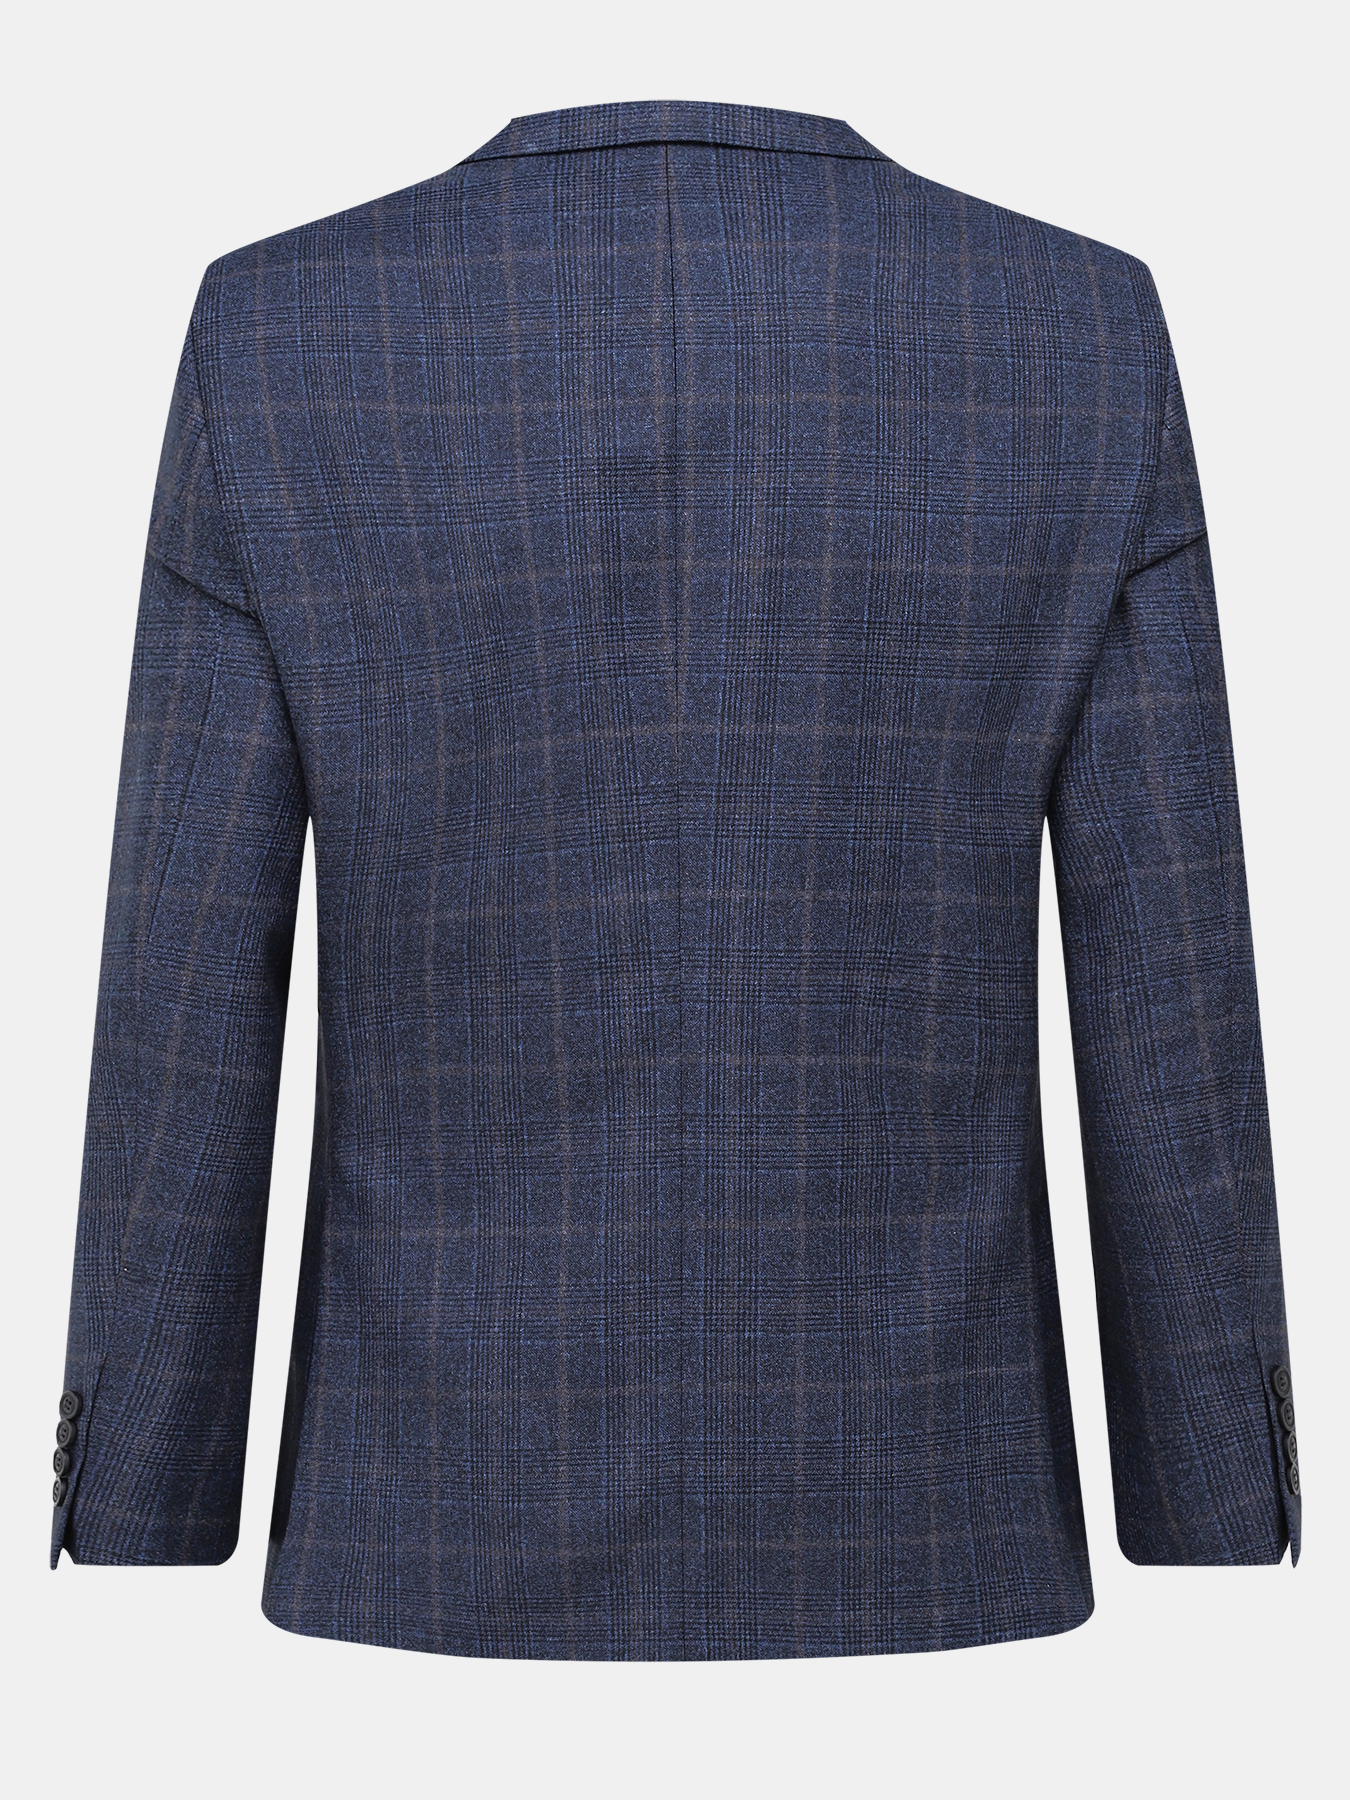 Пиджак Alessandro Manzoni 386884-072, цвет синий, размер 50 - фото 2